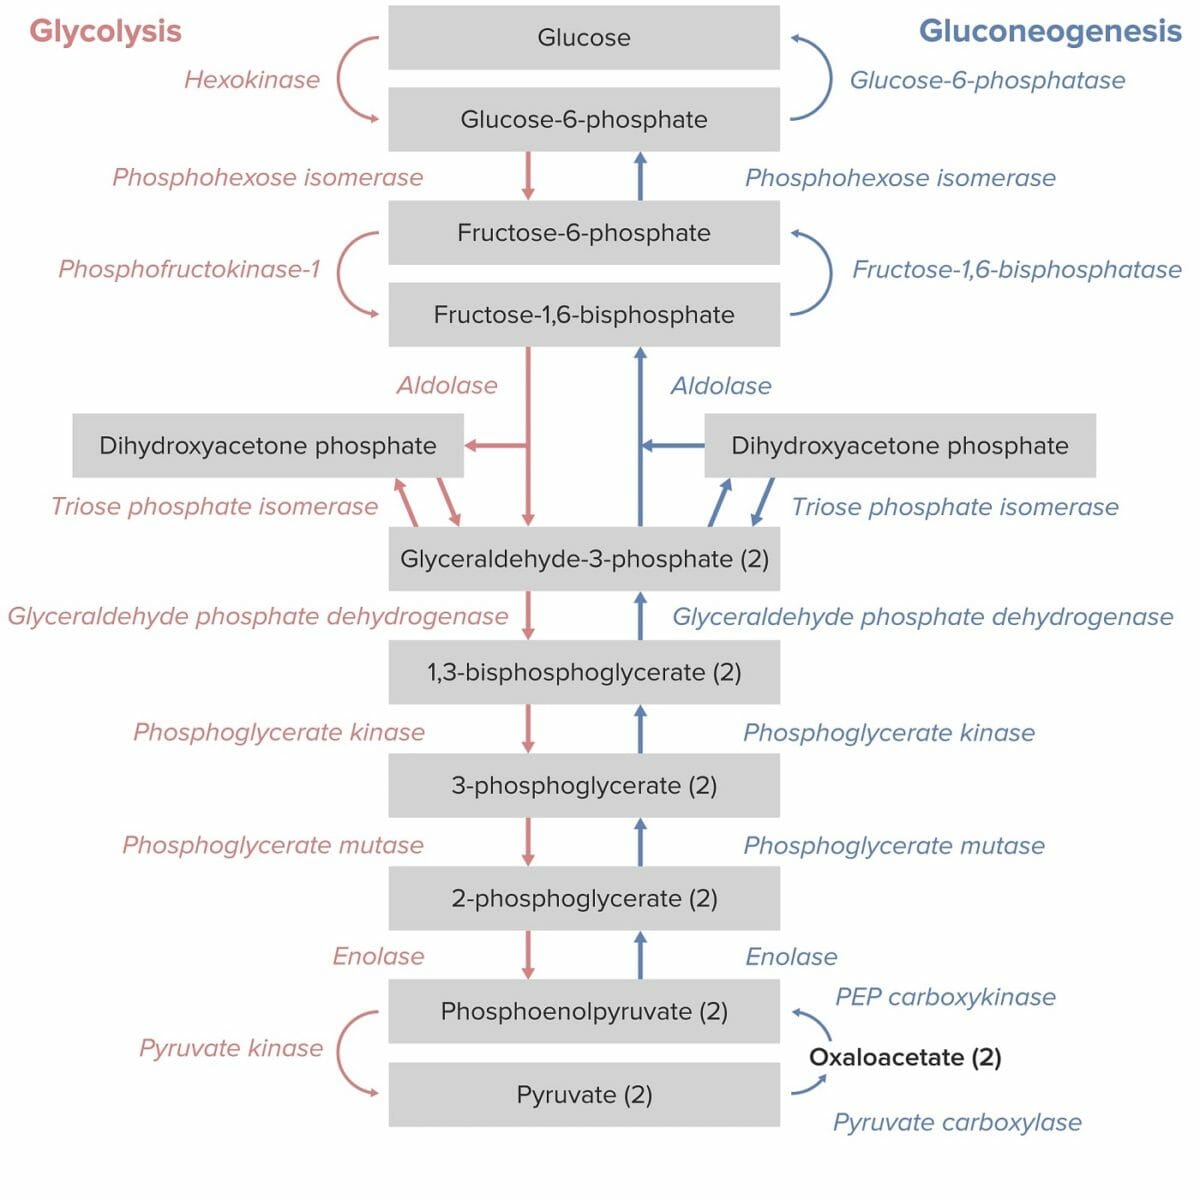 La gluconeogénesis como reverso de la glucólisis